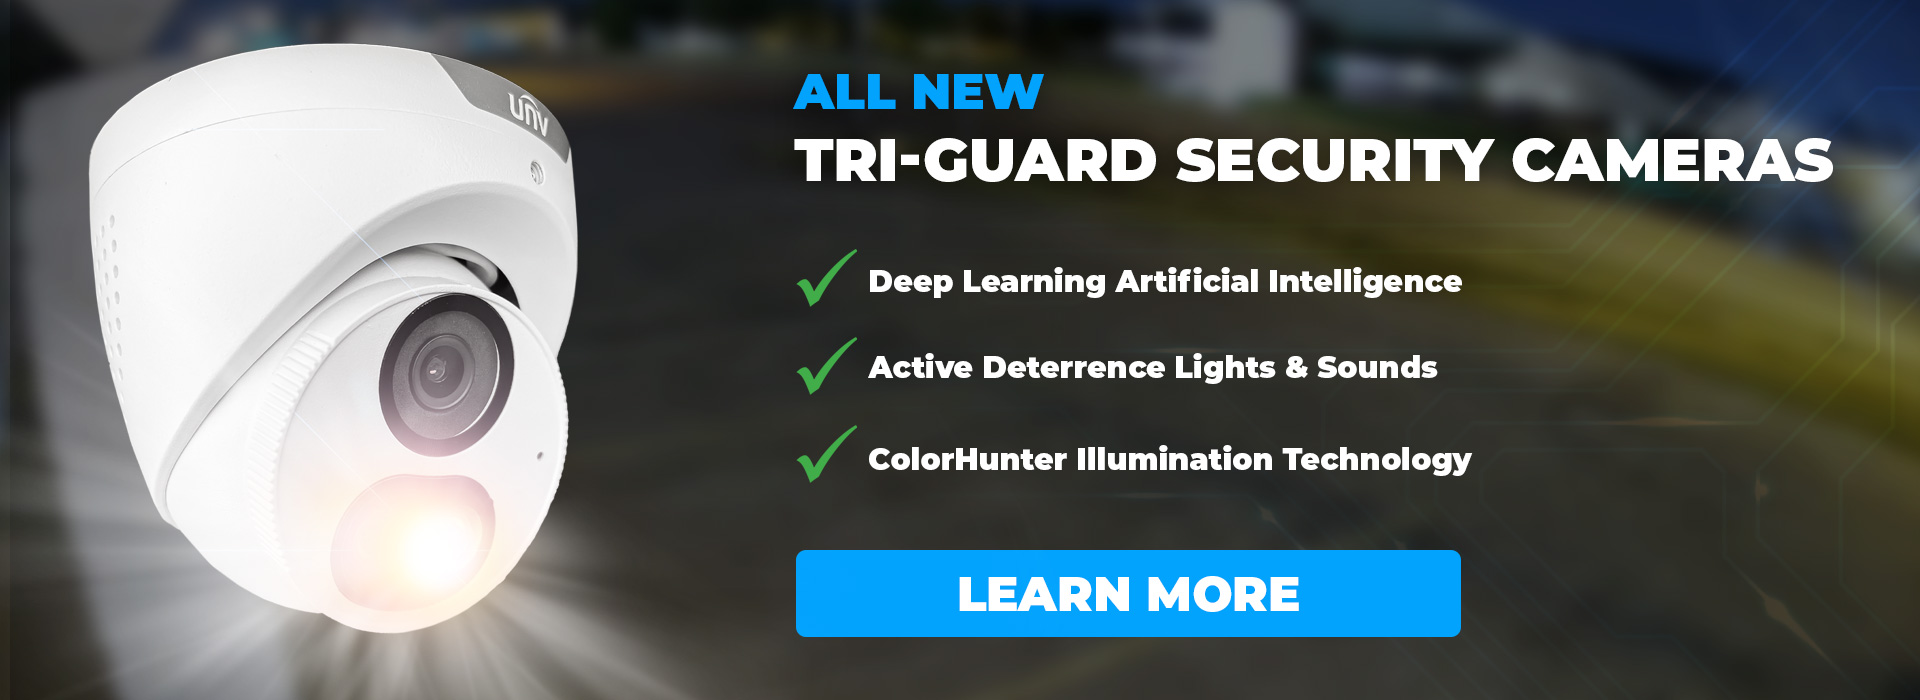 Tri-Guard Security Cameras.